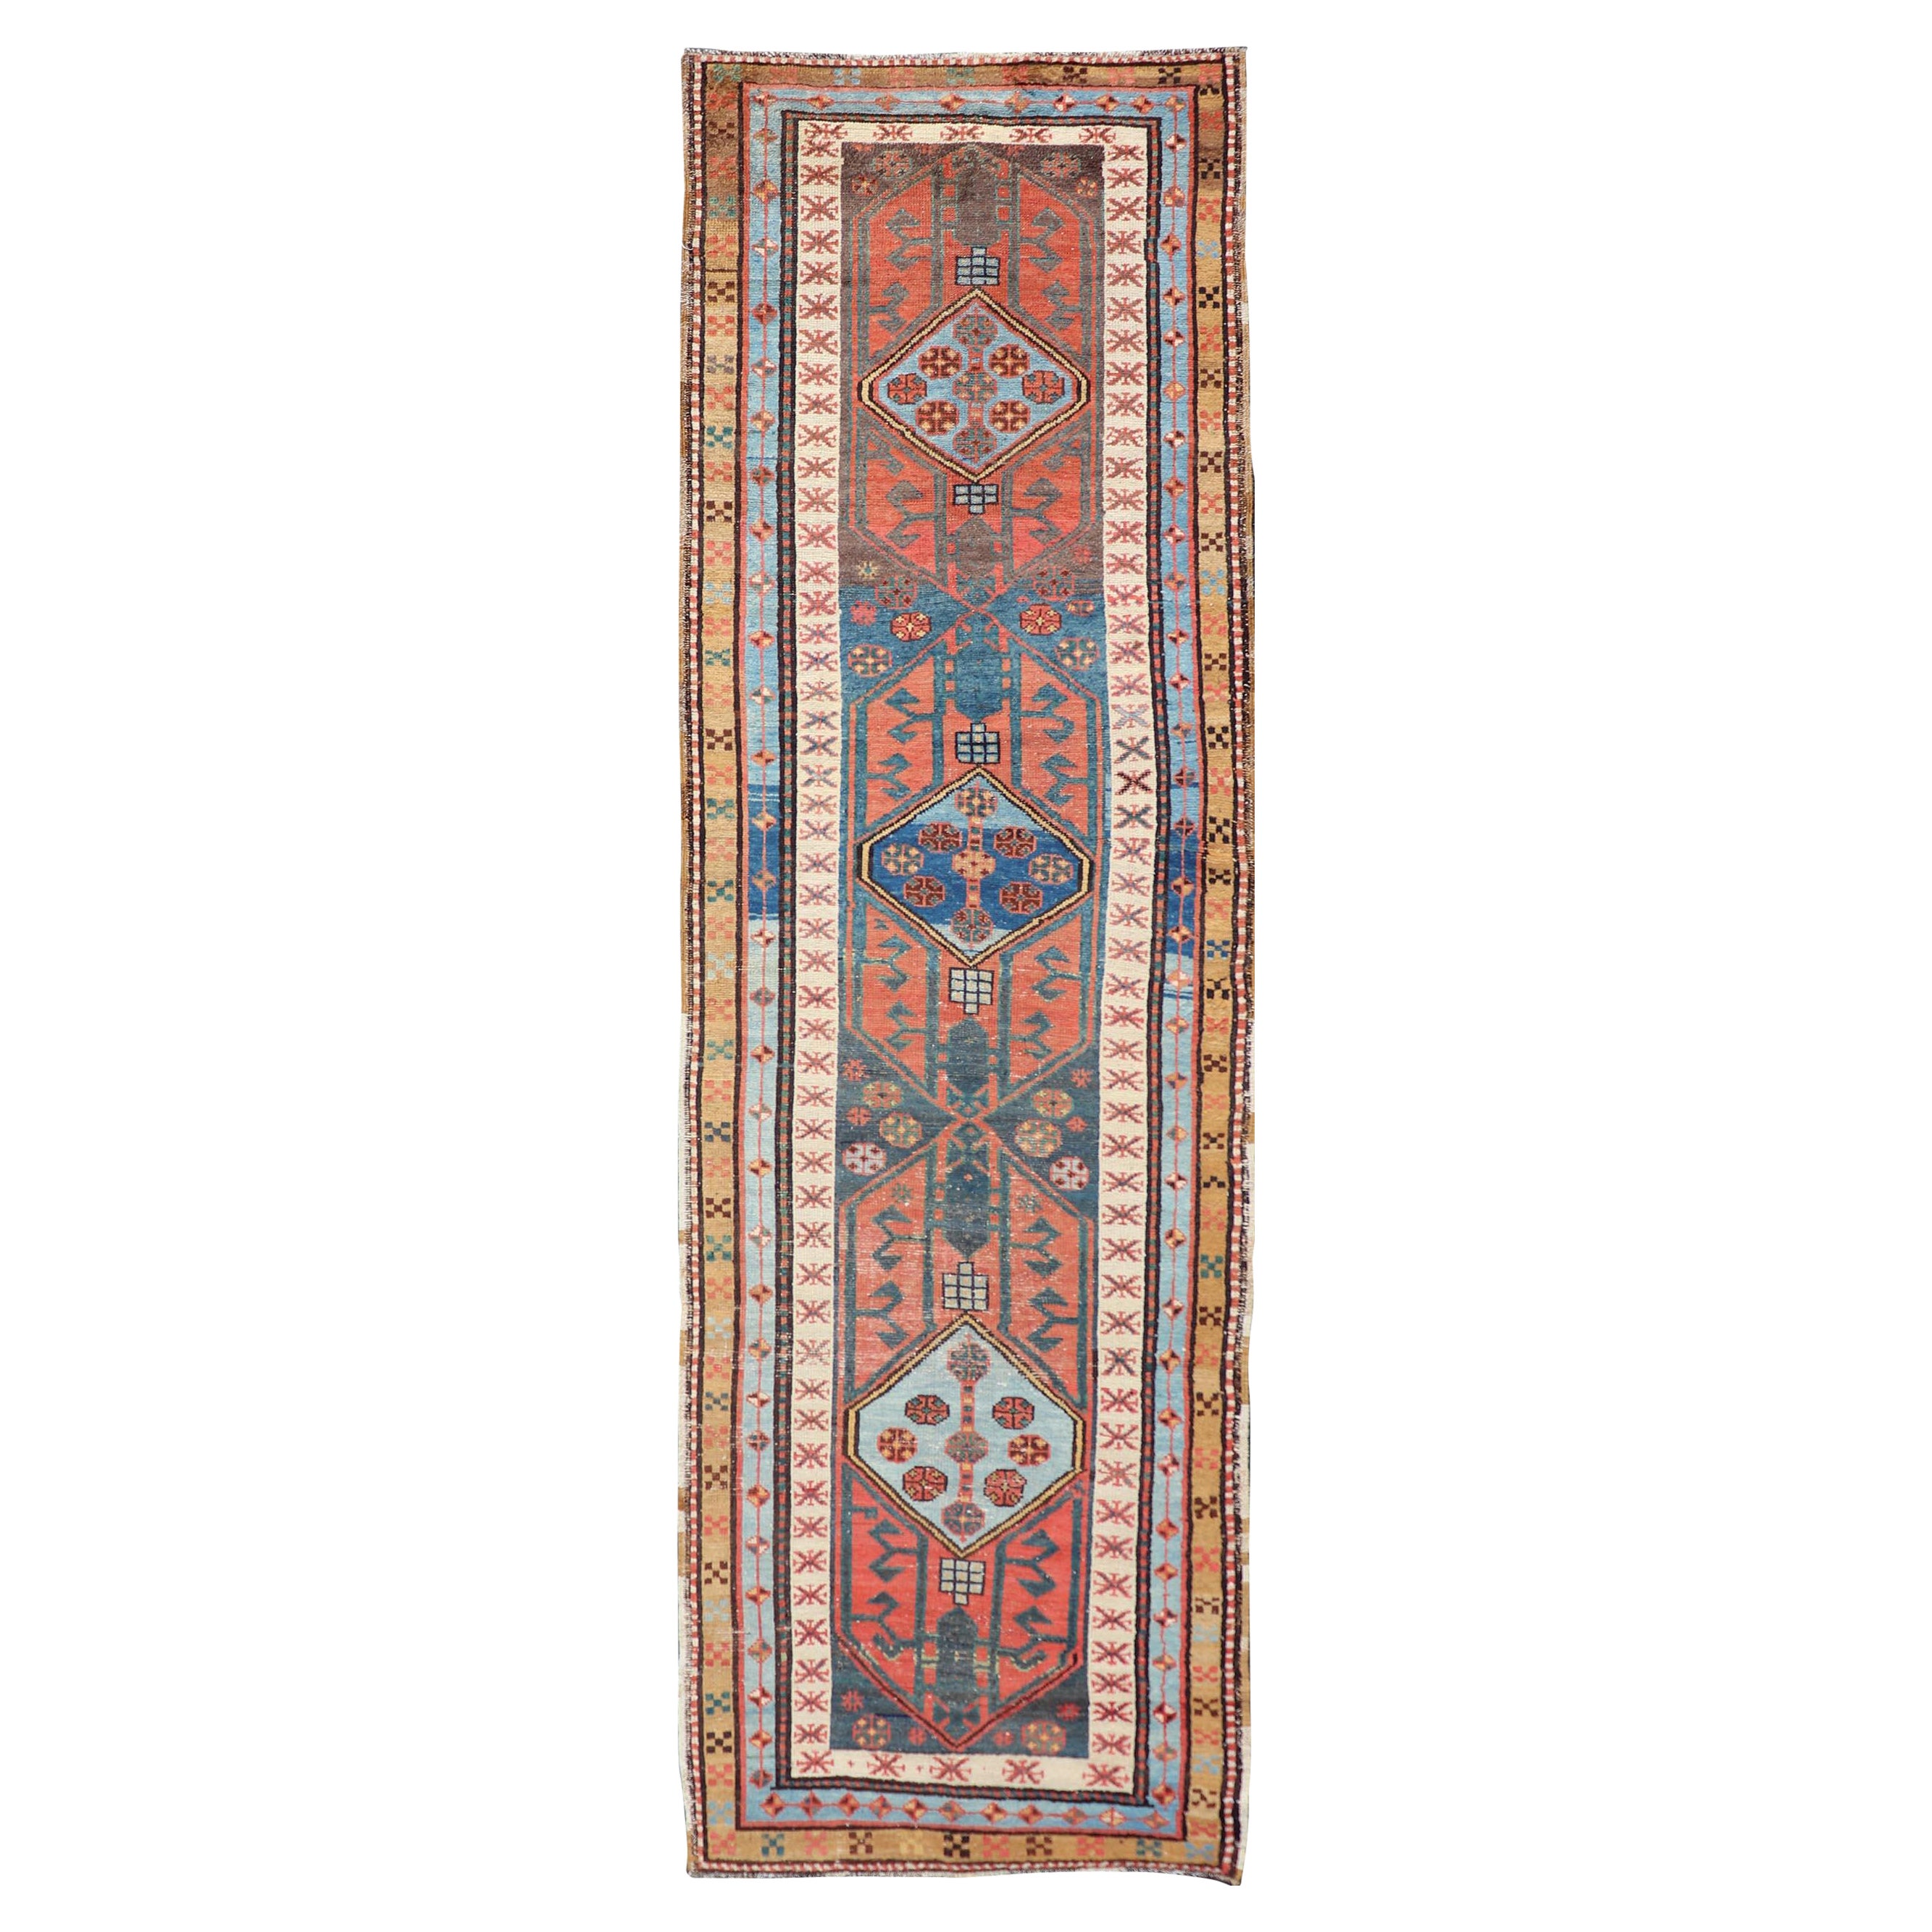 Antique Colorful Persian Heriz-Serapi Runner with a Bold Geometric Design